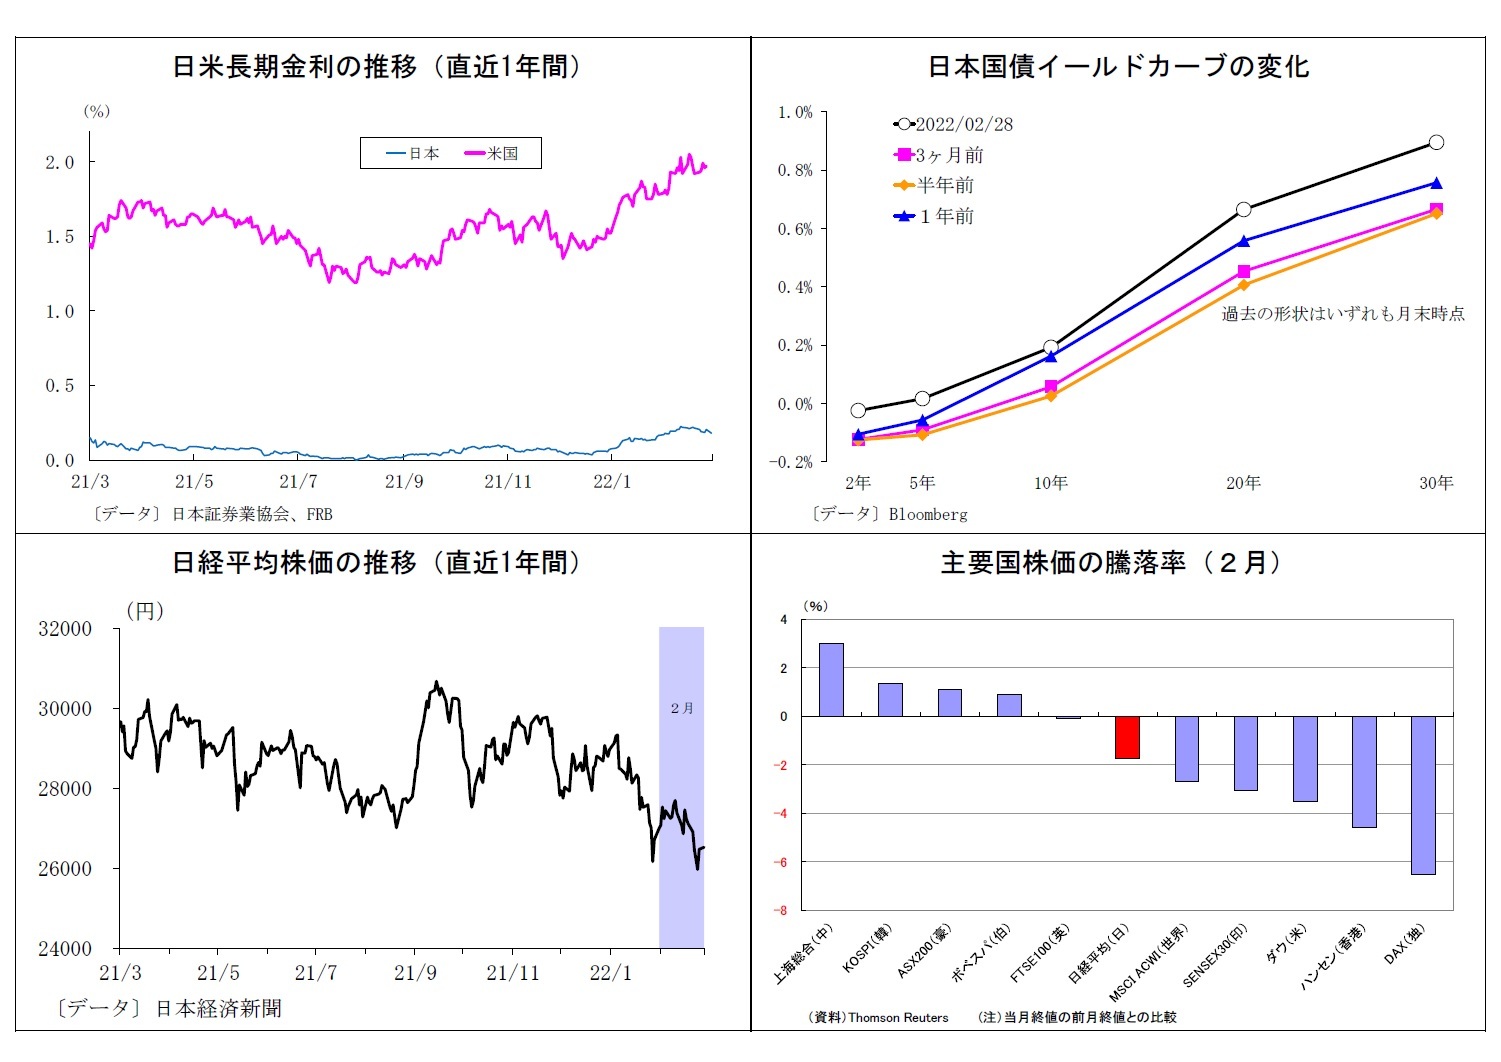 日米長期金利の推移（直近1年間）/日本国債イールドカーブの変化/日経平均株価の推移（直近1年間）/主要国株価の騰落率（２月）